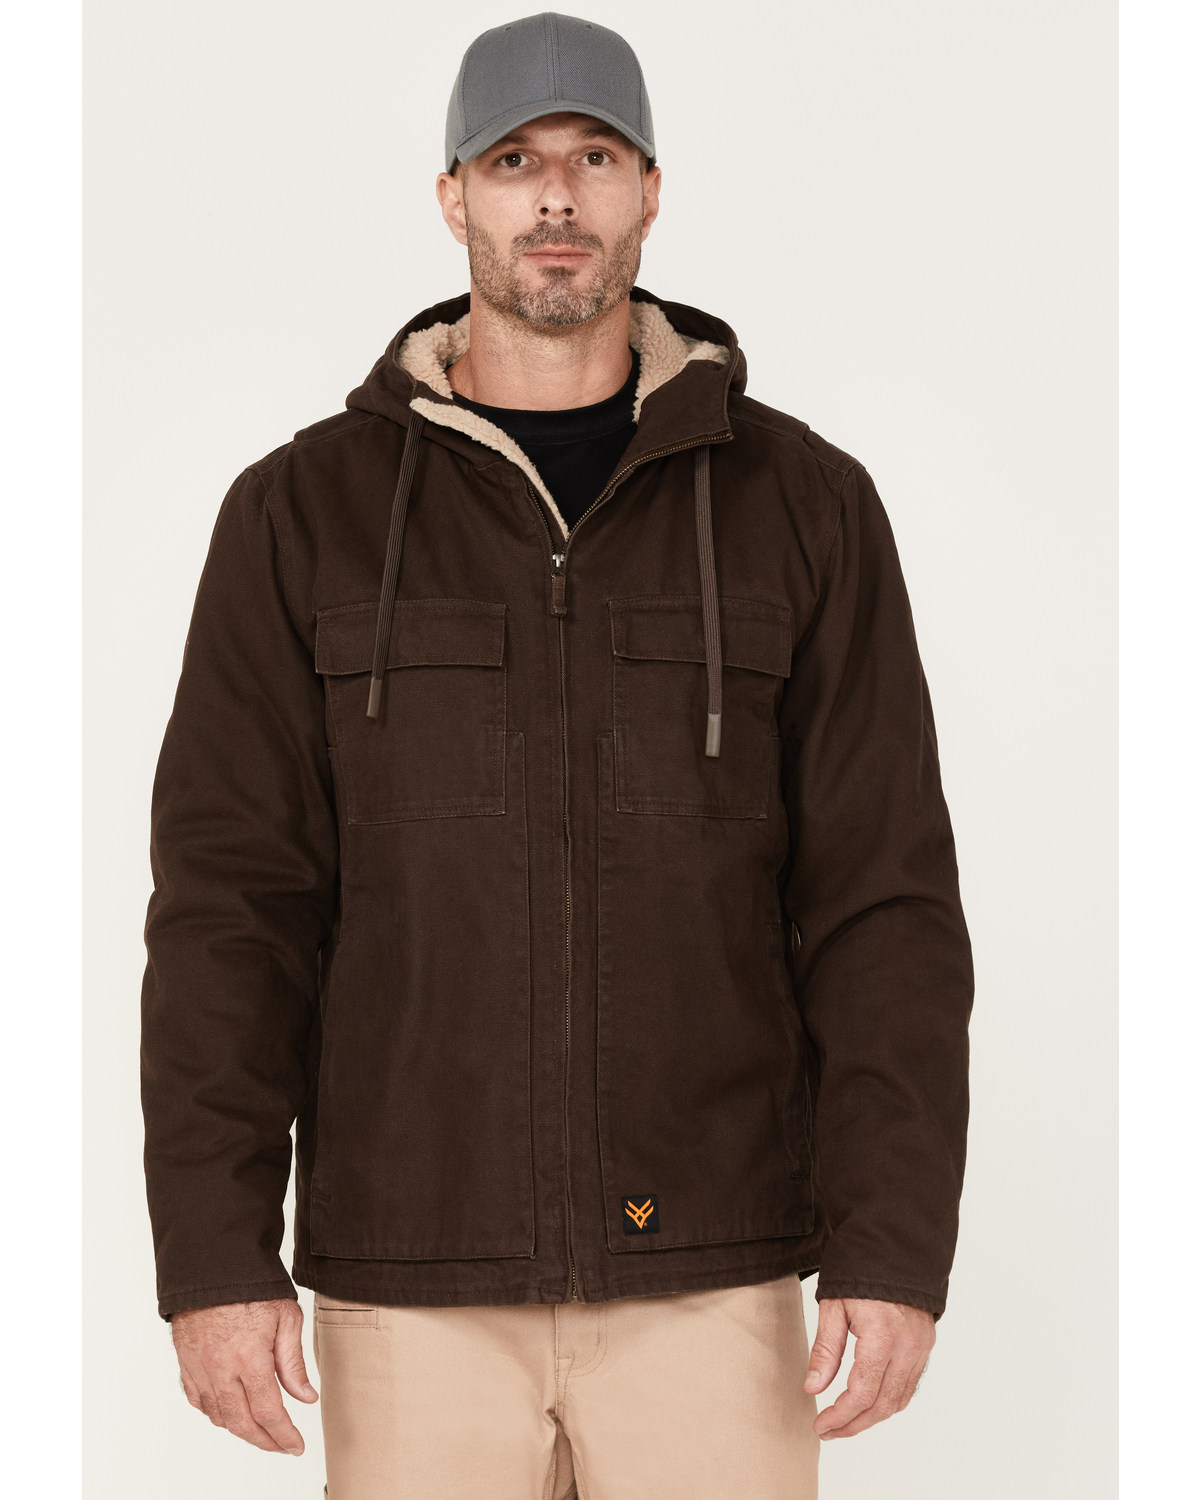 Hawx Men's Weathered Sherpa Lined Jacket